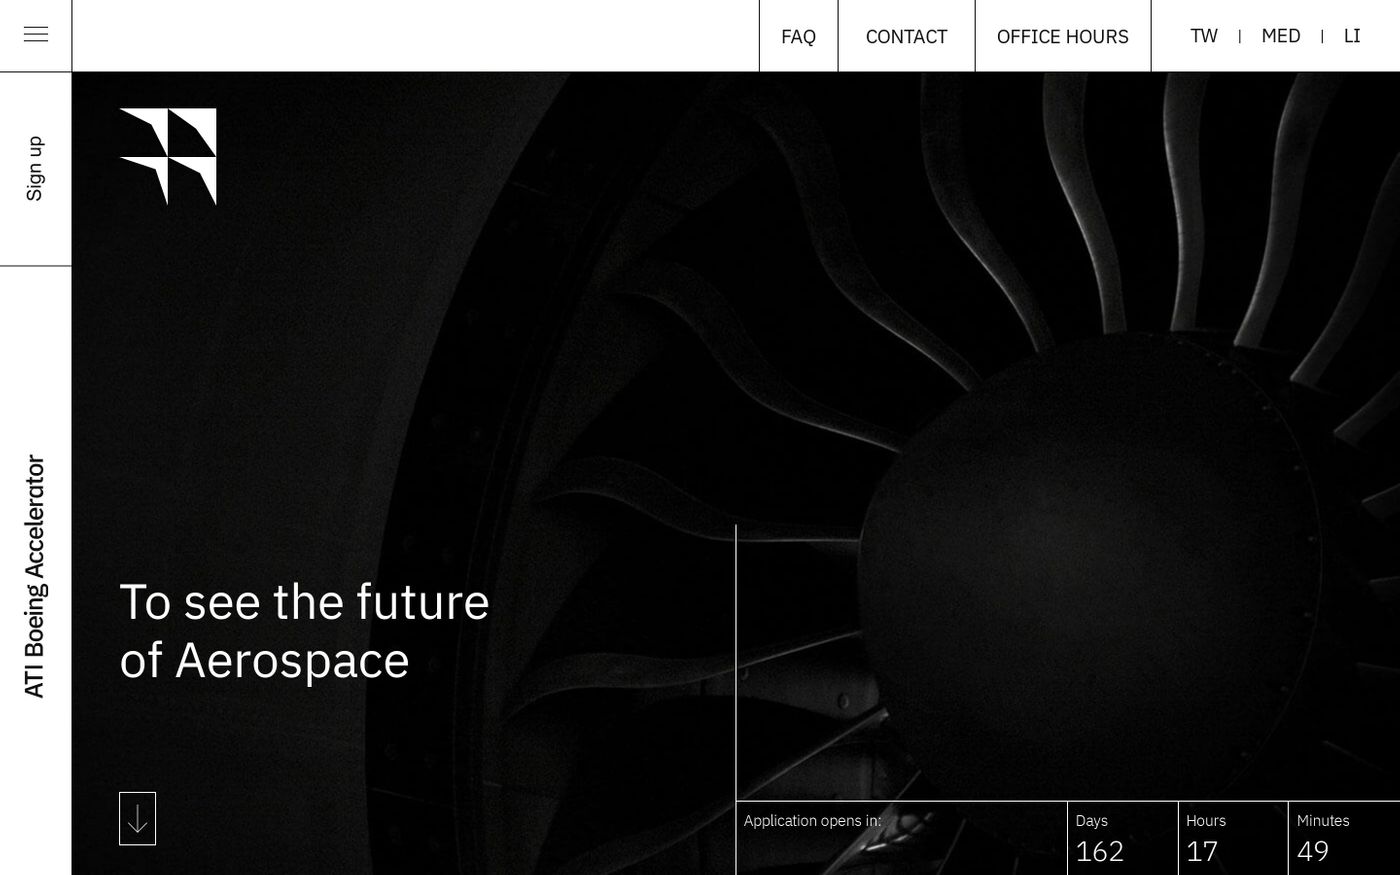 Screenshot of ATI Boeing Accelerator website